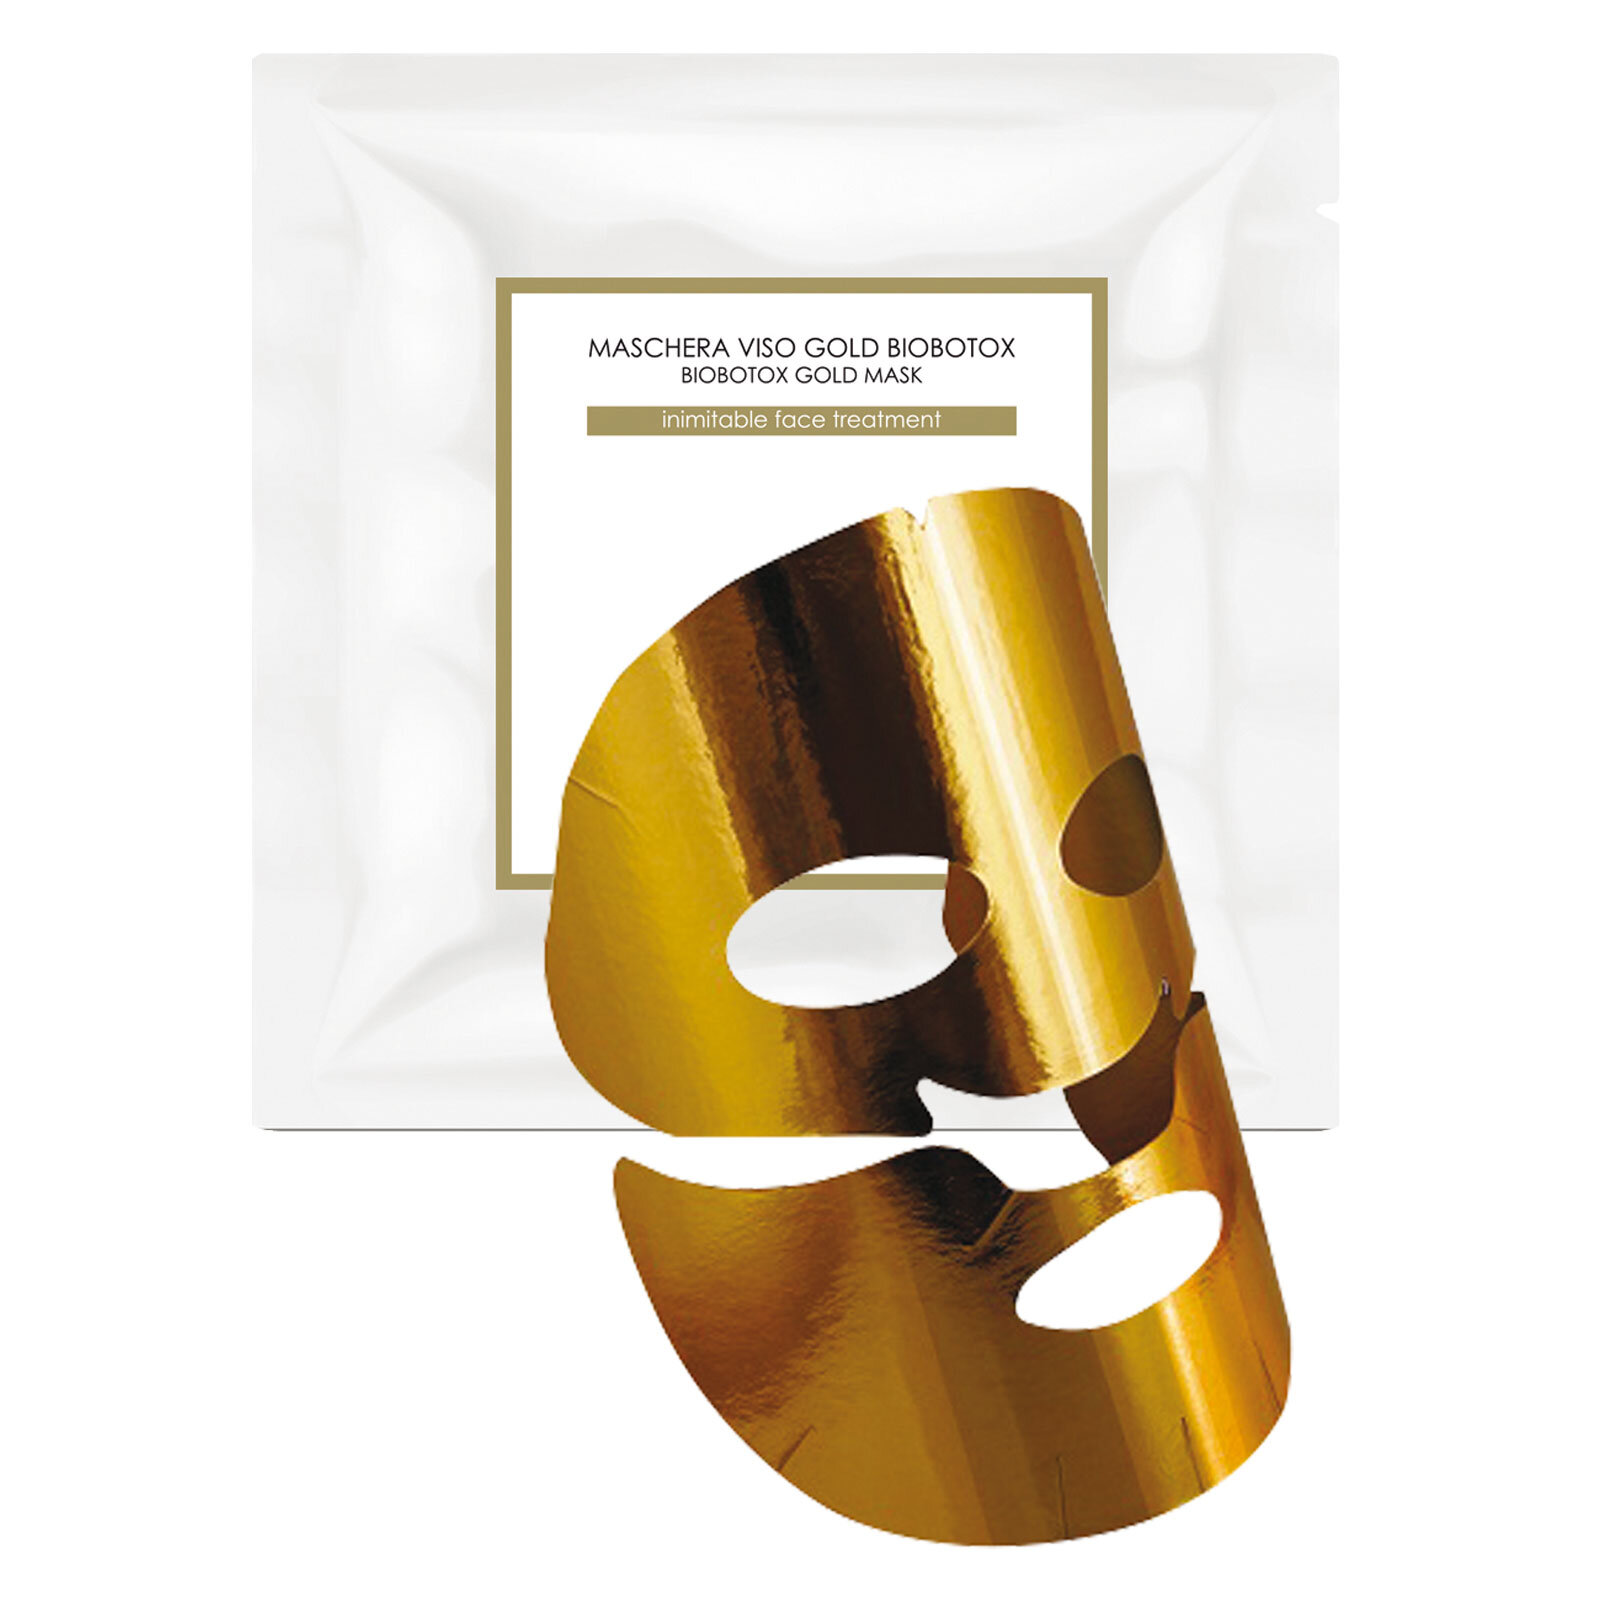 In_biobotox-gold-mask.jpg